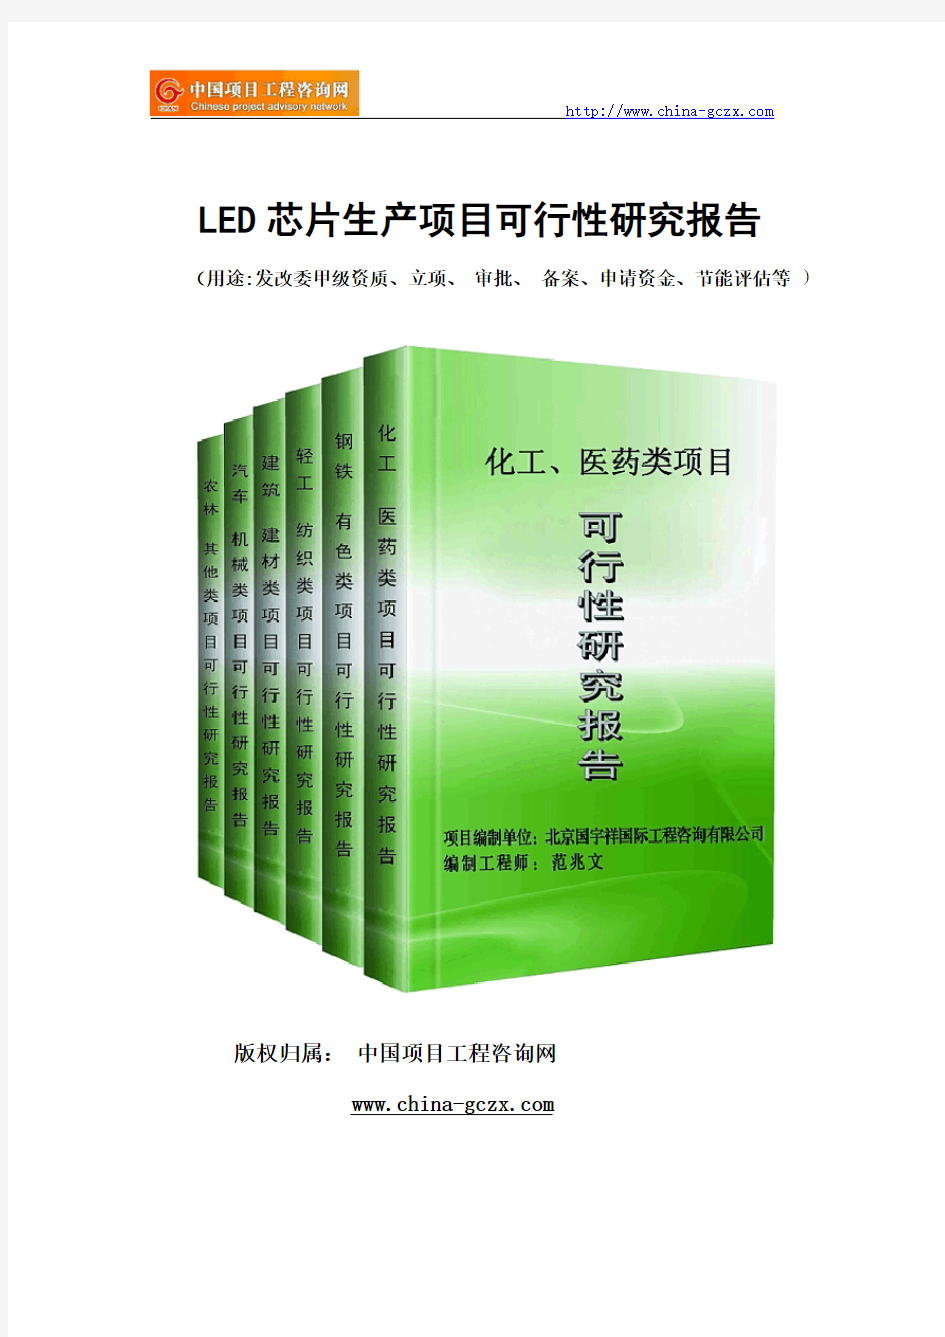 LED芯片生产项目可行性研究报告(专业经典案例)